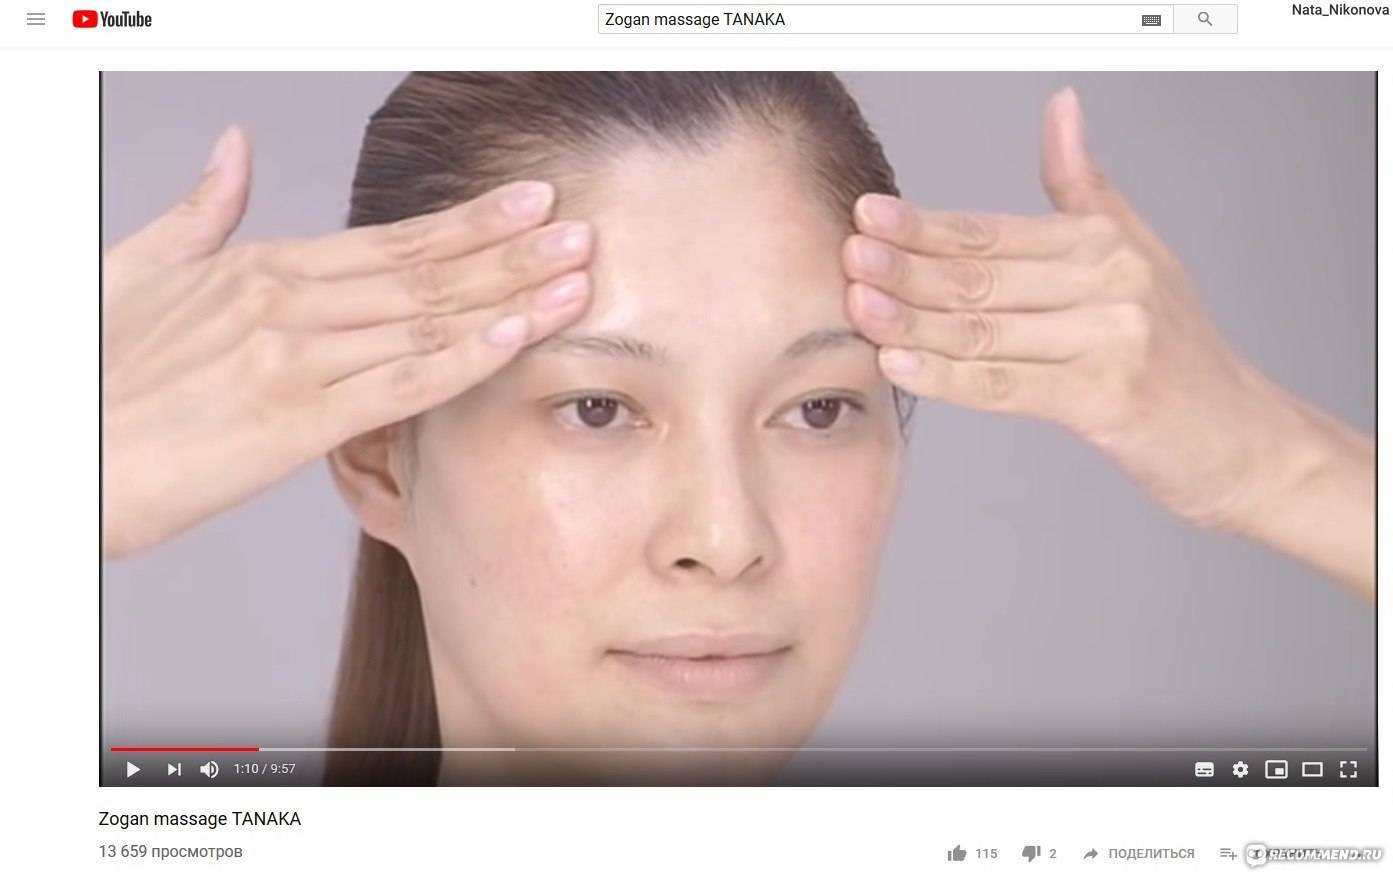 Омолаживающий японский массаж лица асахи (zogan) - видео урок танака